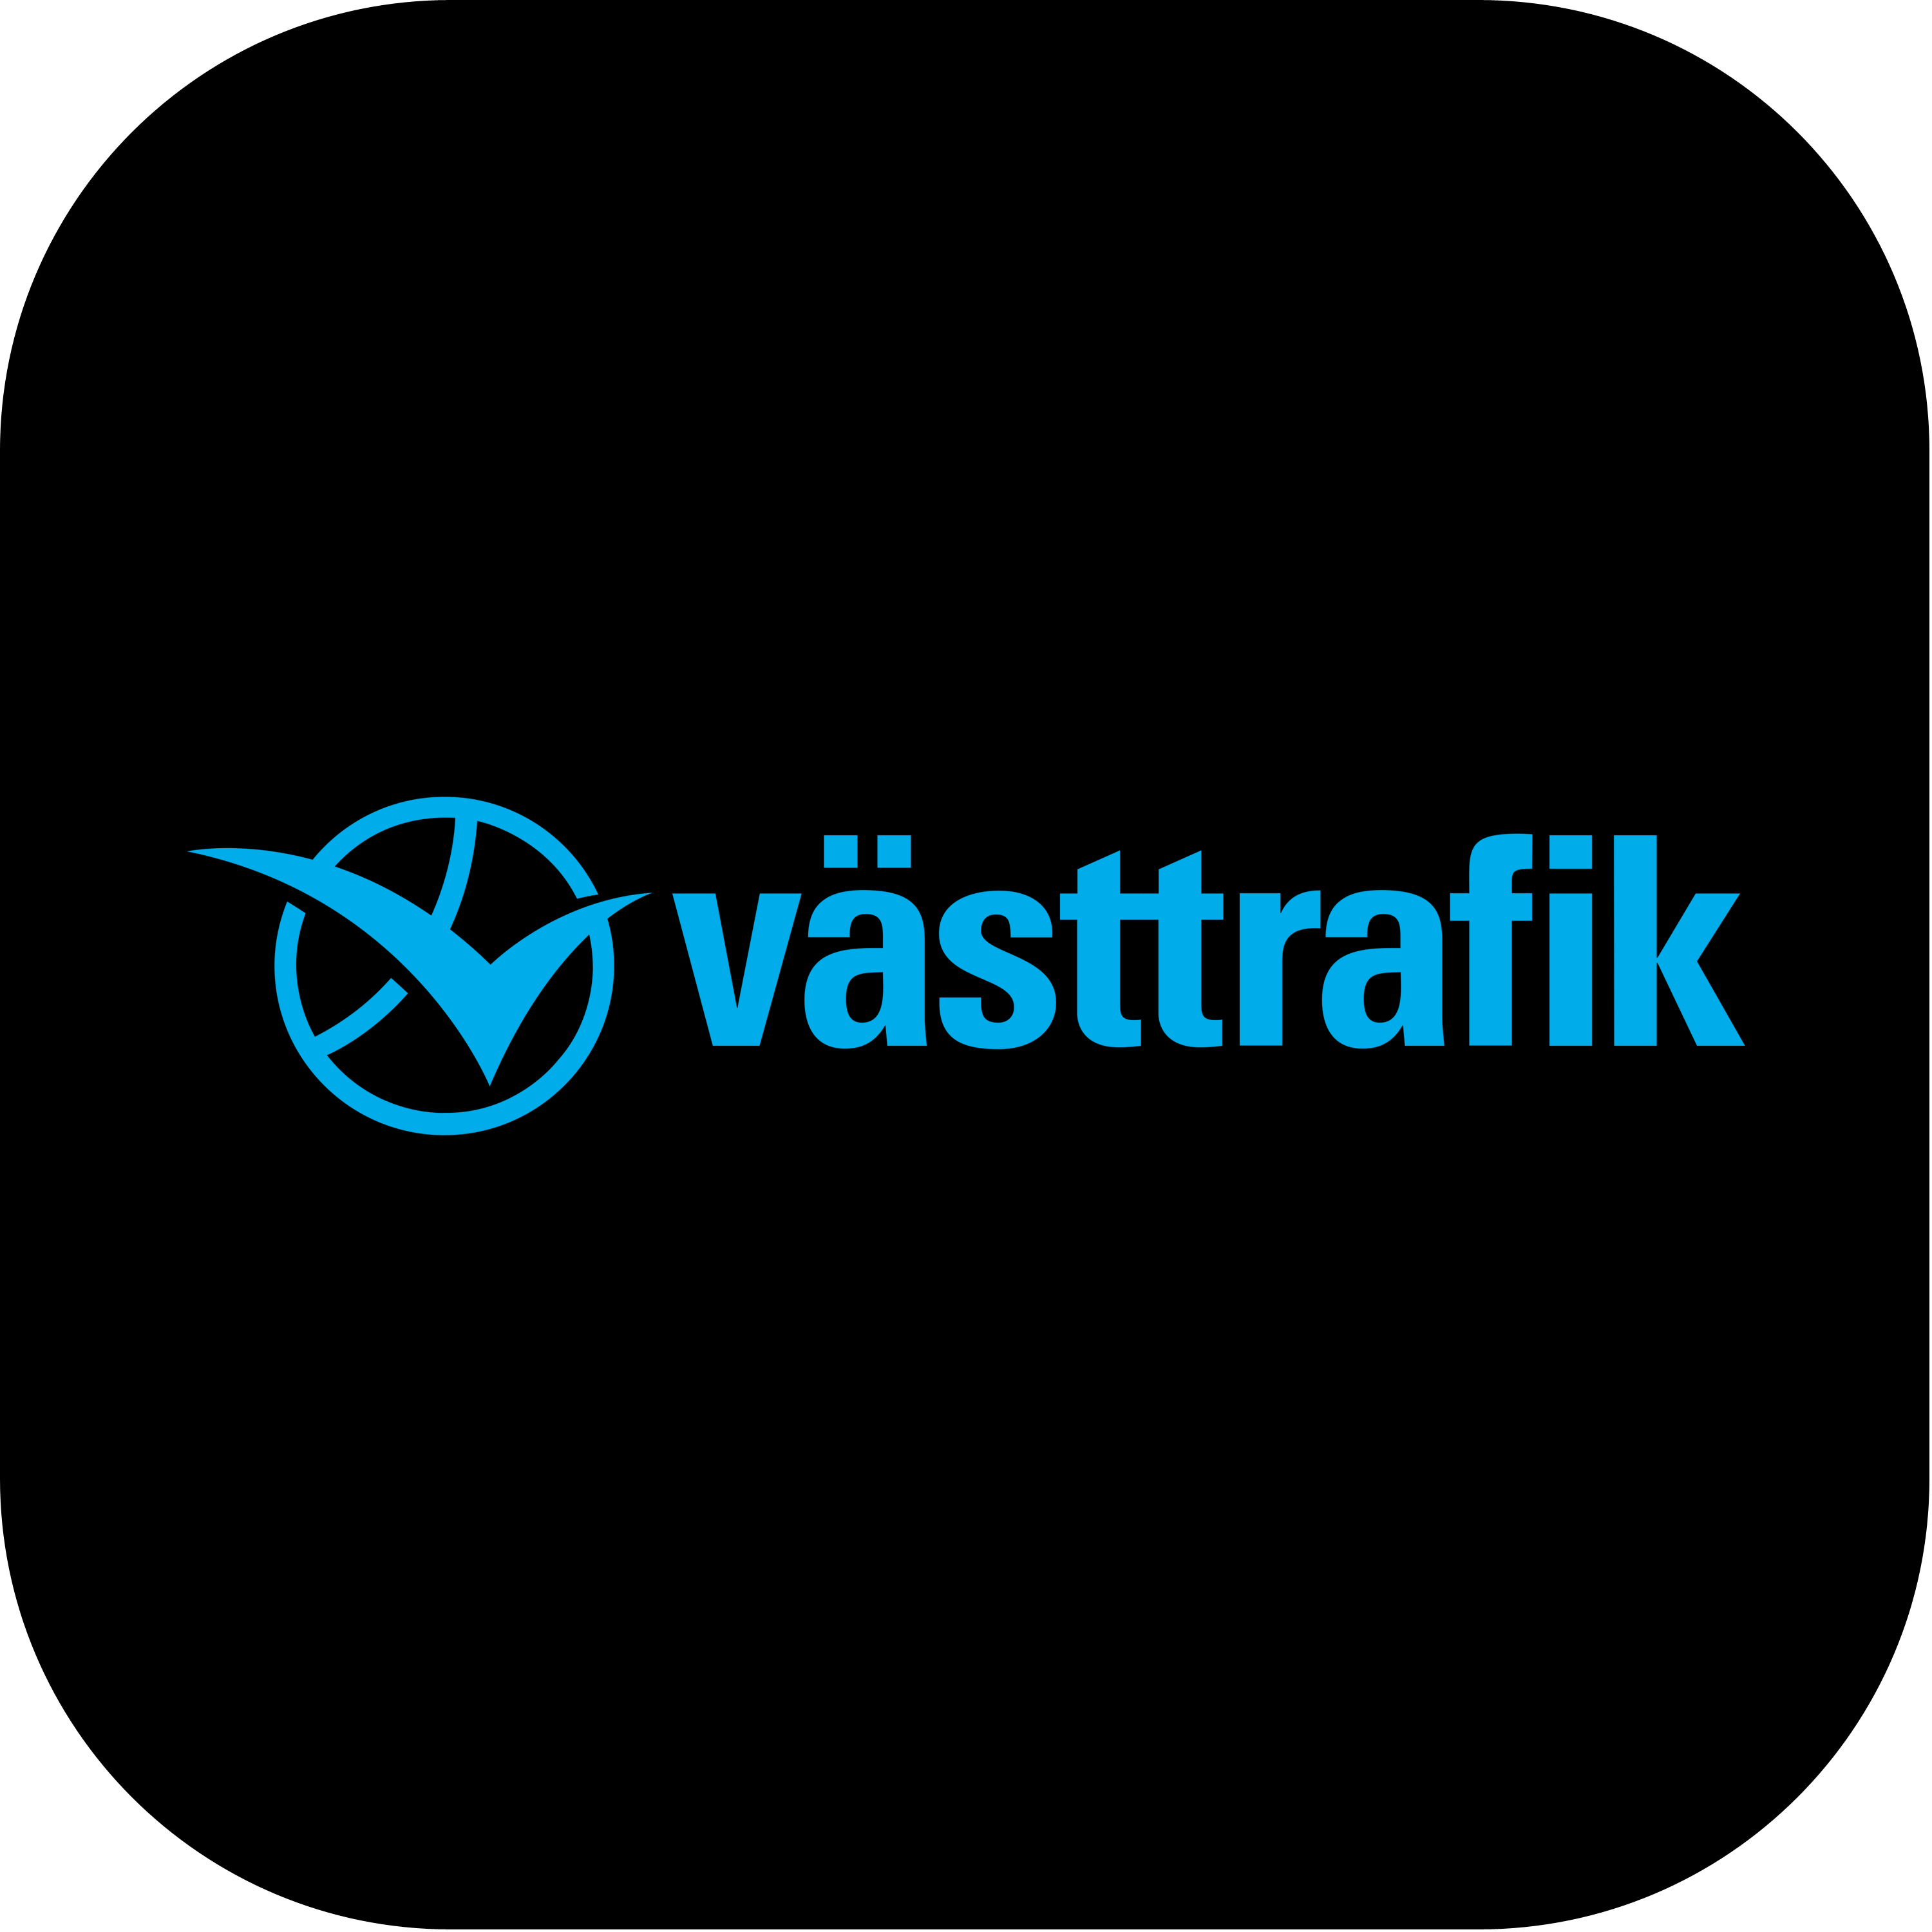 Vasttrafik Logo Transparent Photo